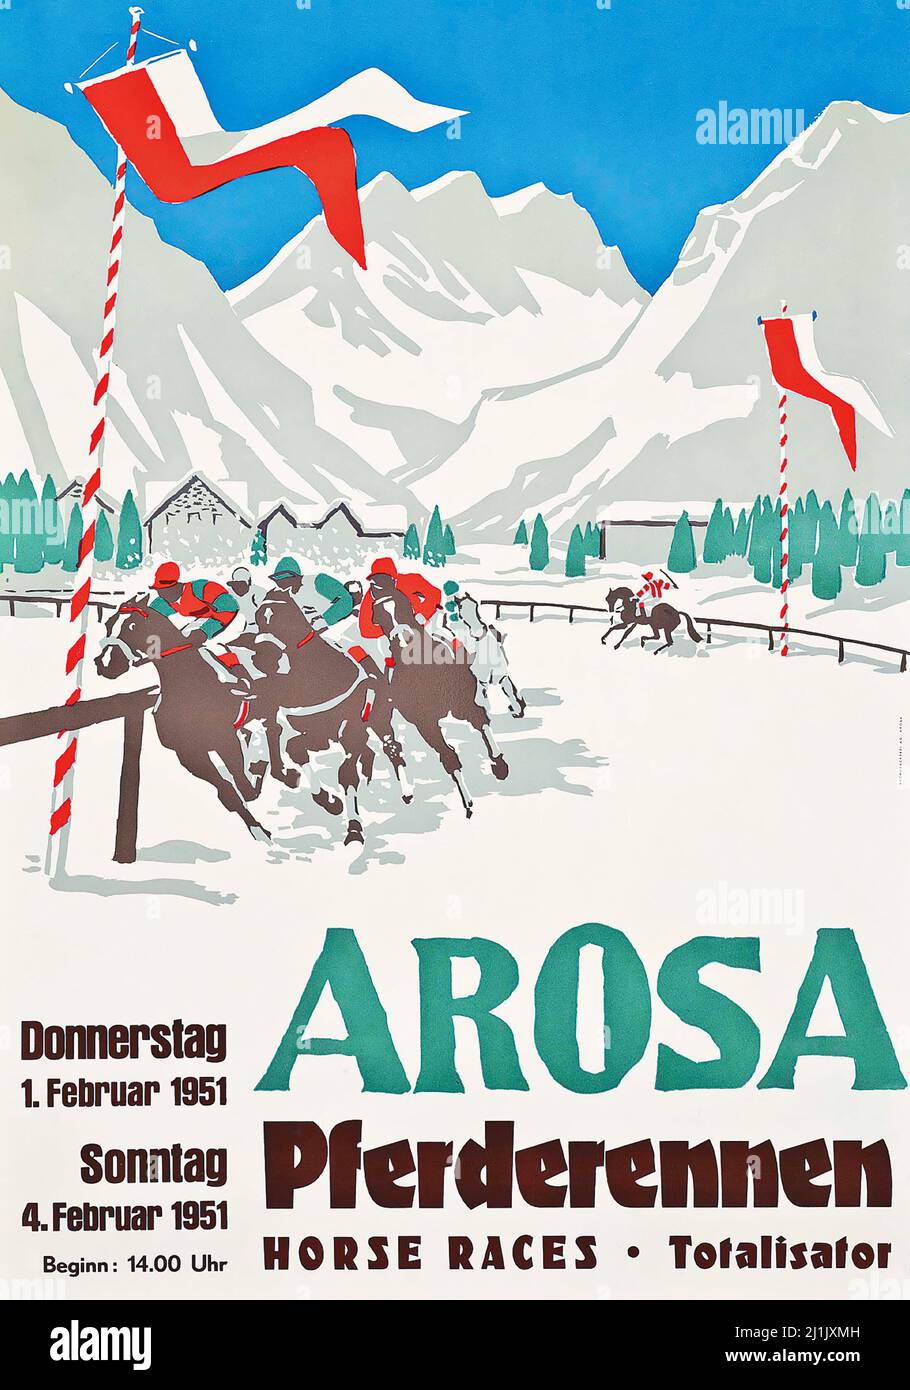 Vintage travel poster AROSA PFERDERENNEN horse race. 1951. Anonymous artist. Stock Photo